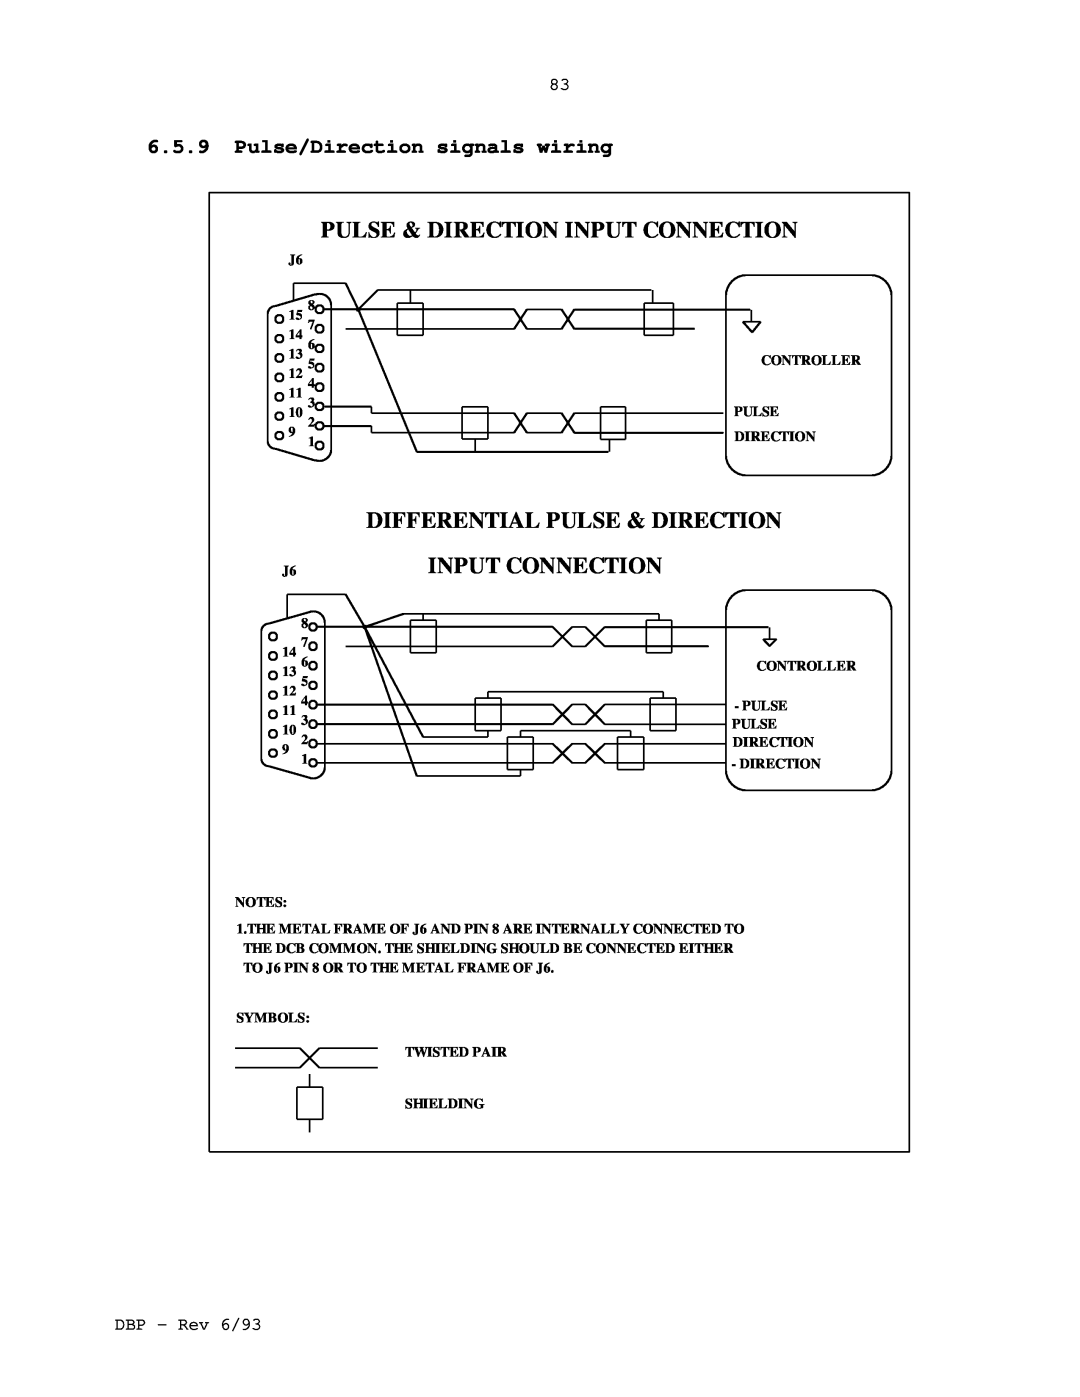 Elmo DBP SERIES Pulse & Direction Input Connection, Differential Pulse & Direction, 6.5.9Pulse/Direction signals wiring 